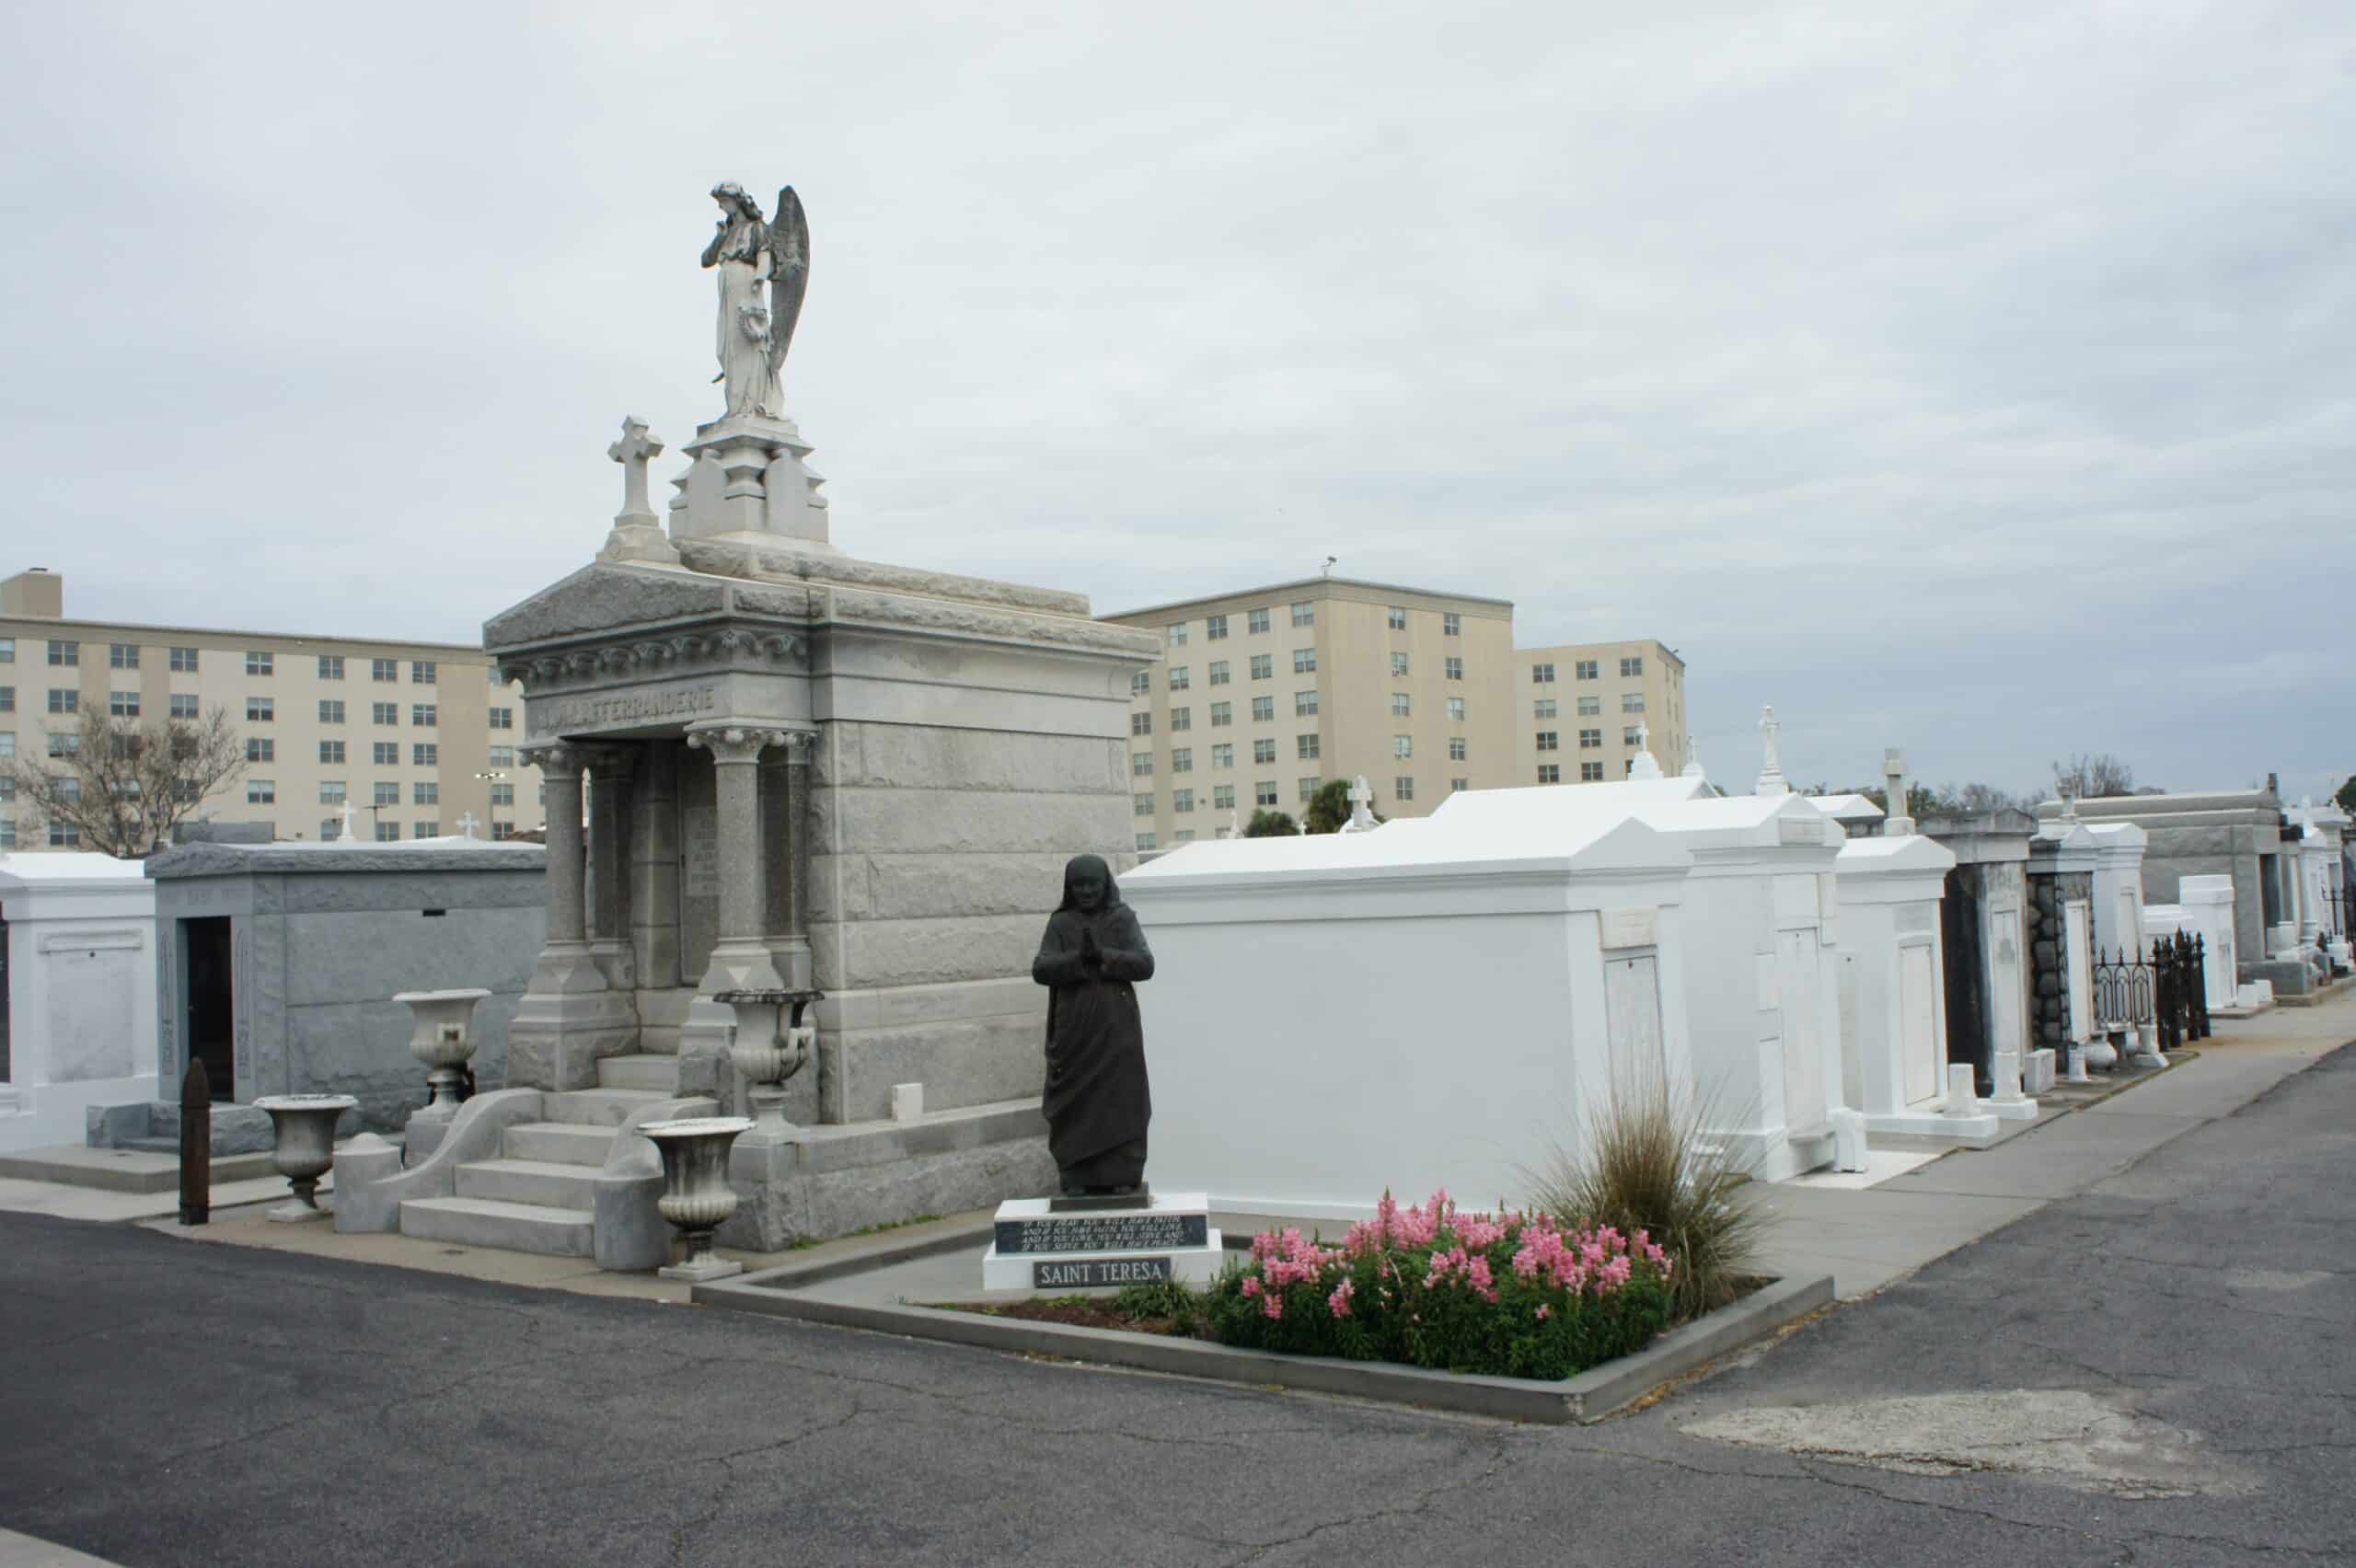 St Louis Cemetery # 3